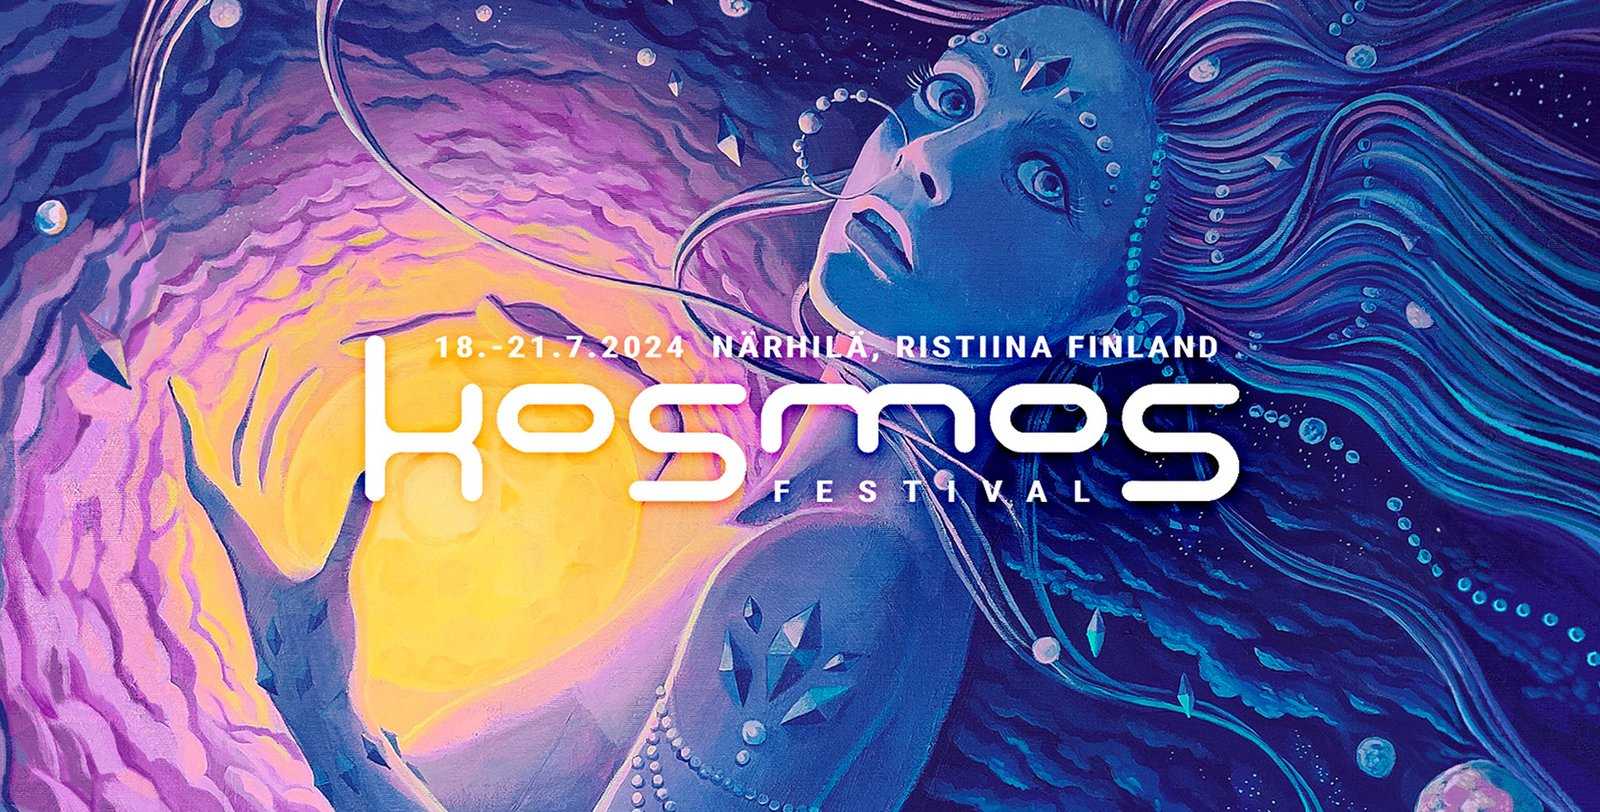 Kosmos Festival workshop 20.7.2024